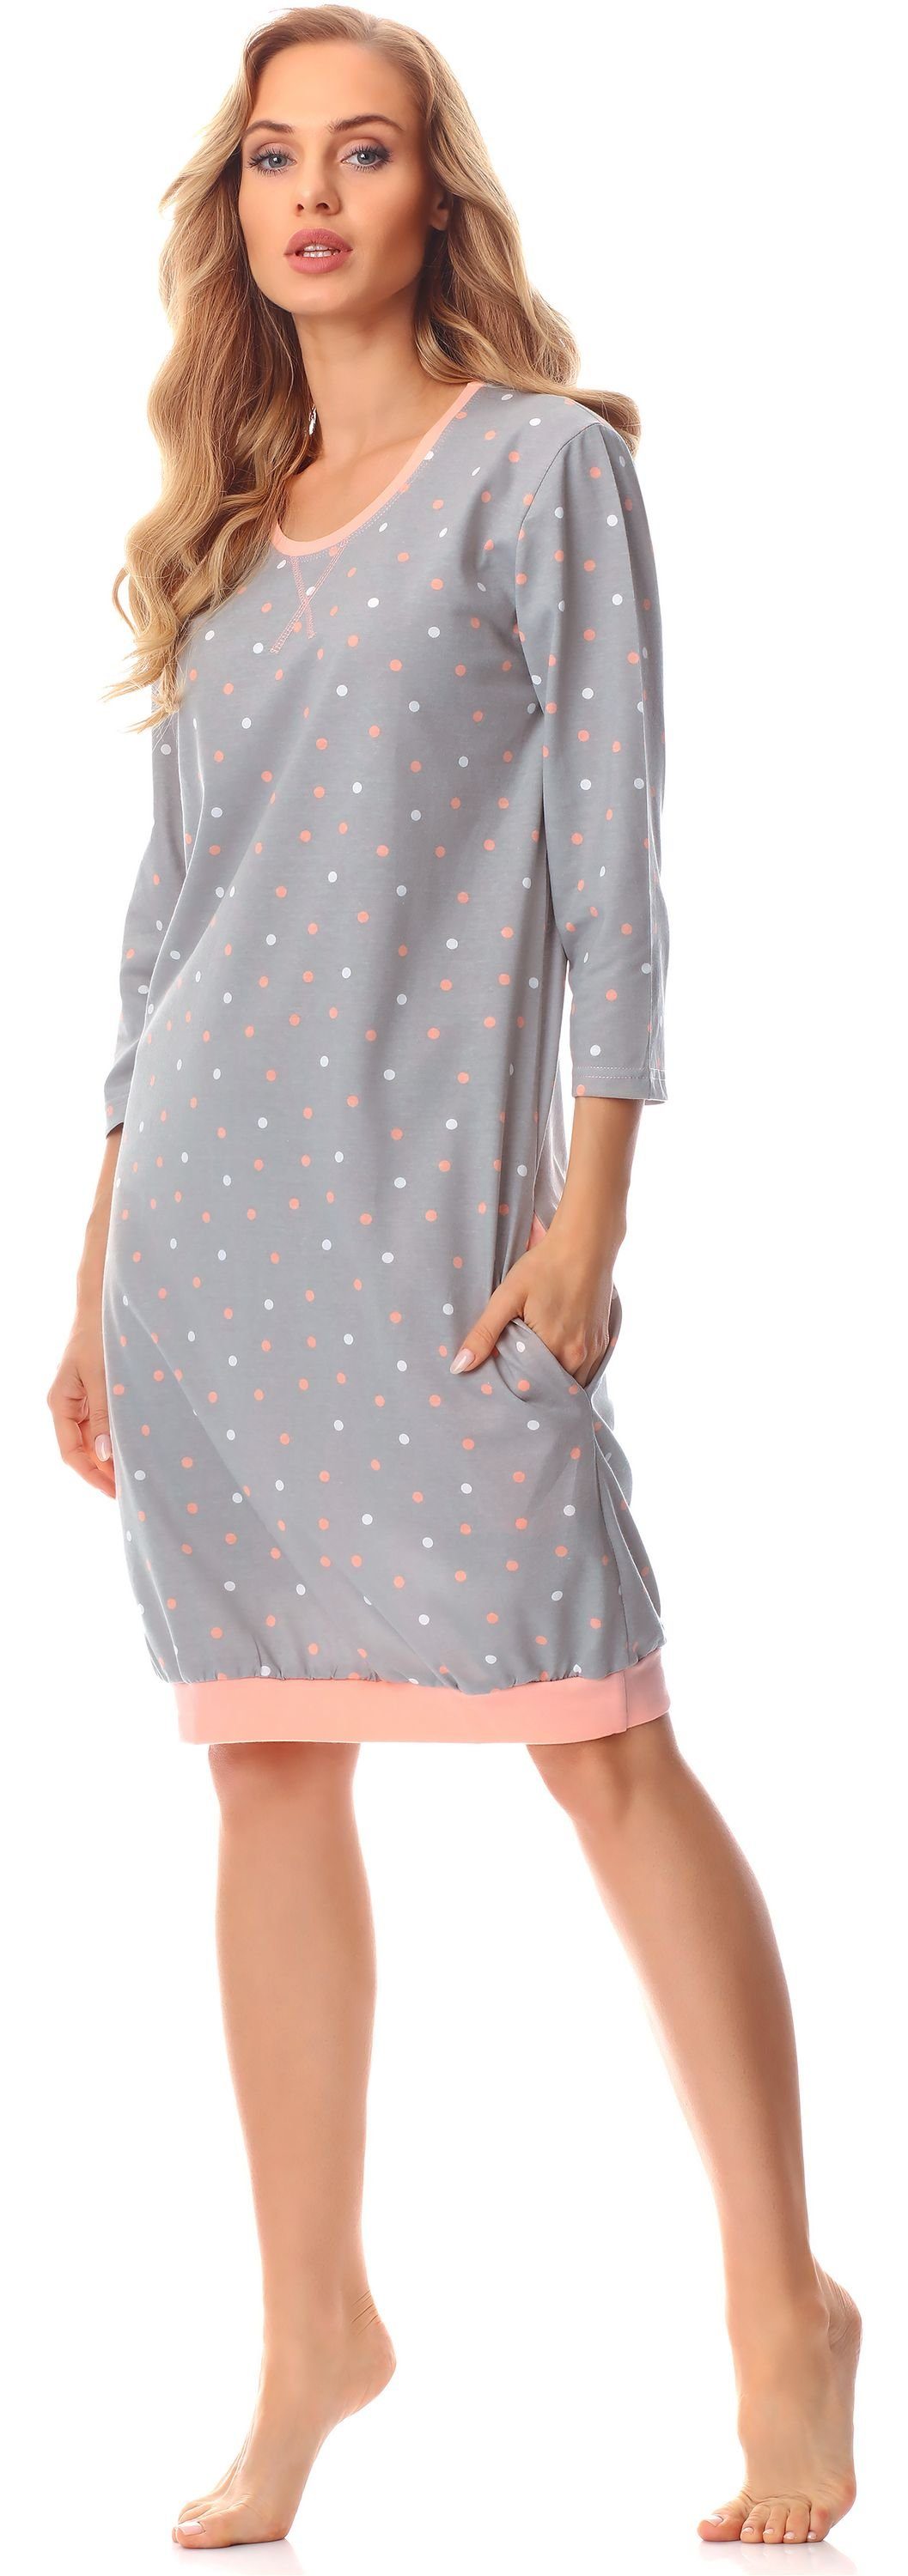 Merry Style Damen Nachthemd Grau/Punkten Nachthemd MS10-182 (1-tlg)